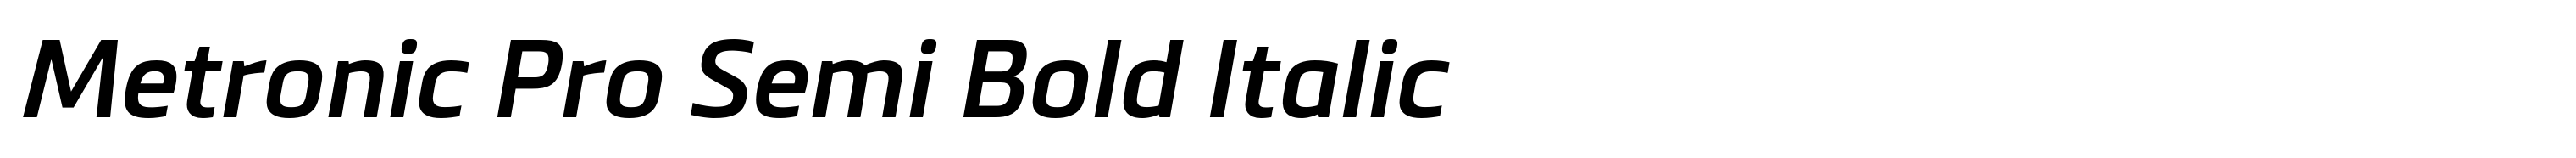 Metronic Pro Semi Bold Italic